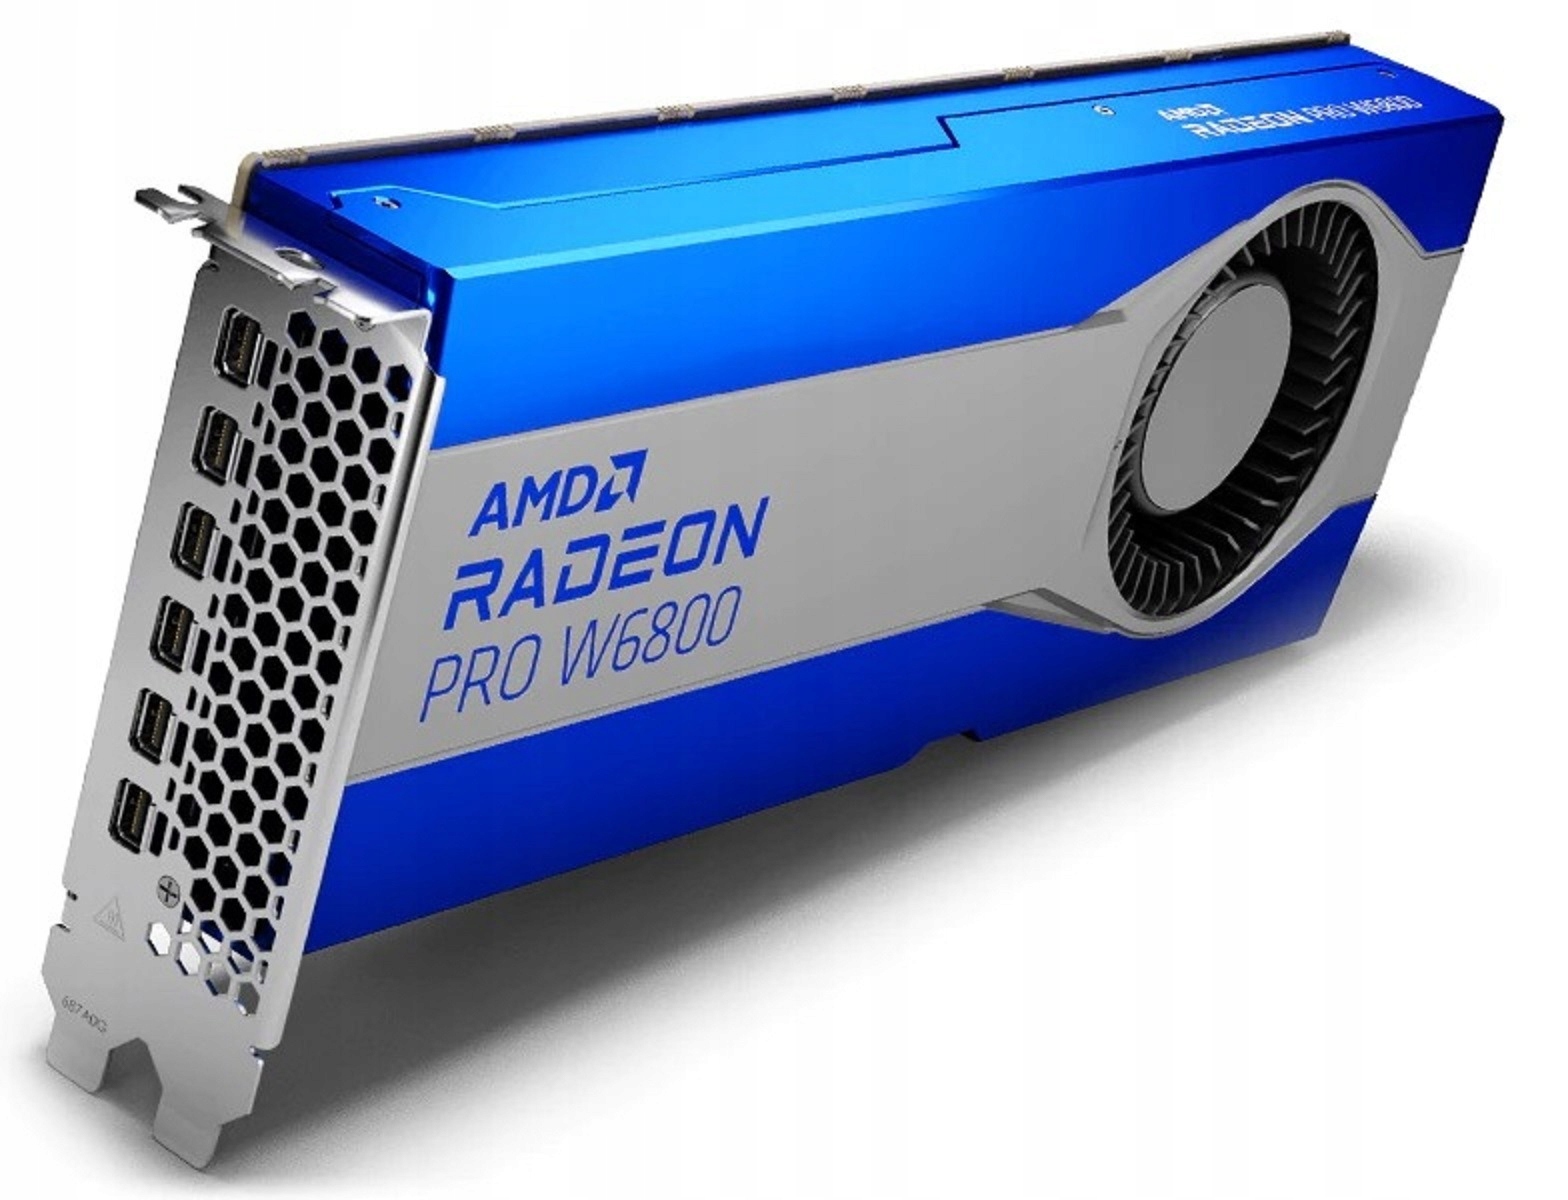 Видеокарта AMD Radeon Pro W6800 32GB вес продукта с упаковкой 0.15 kg